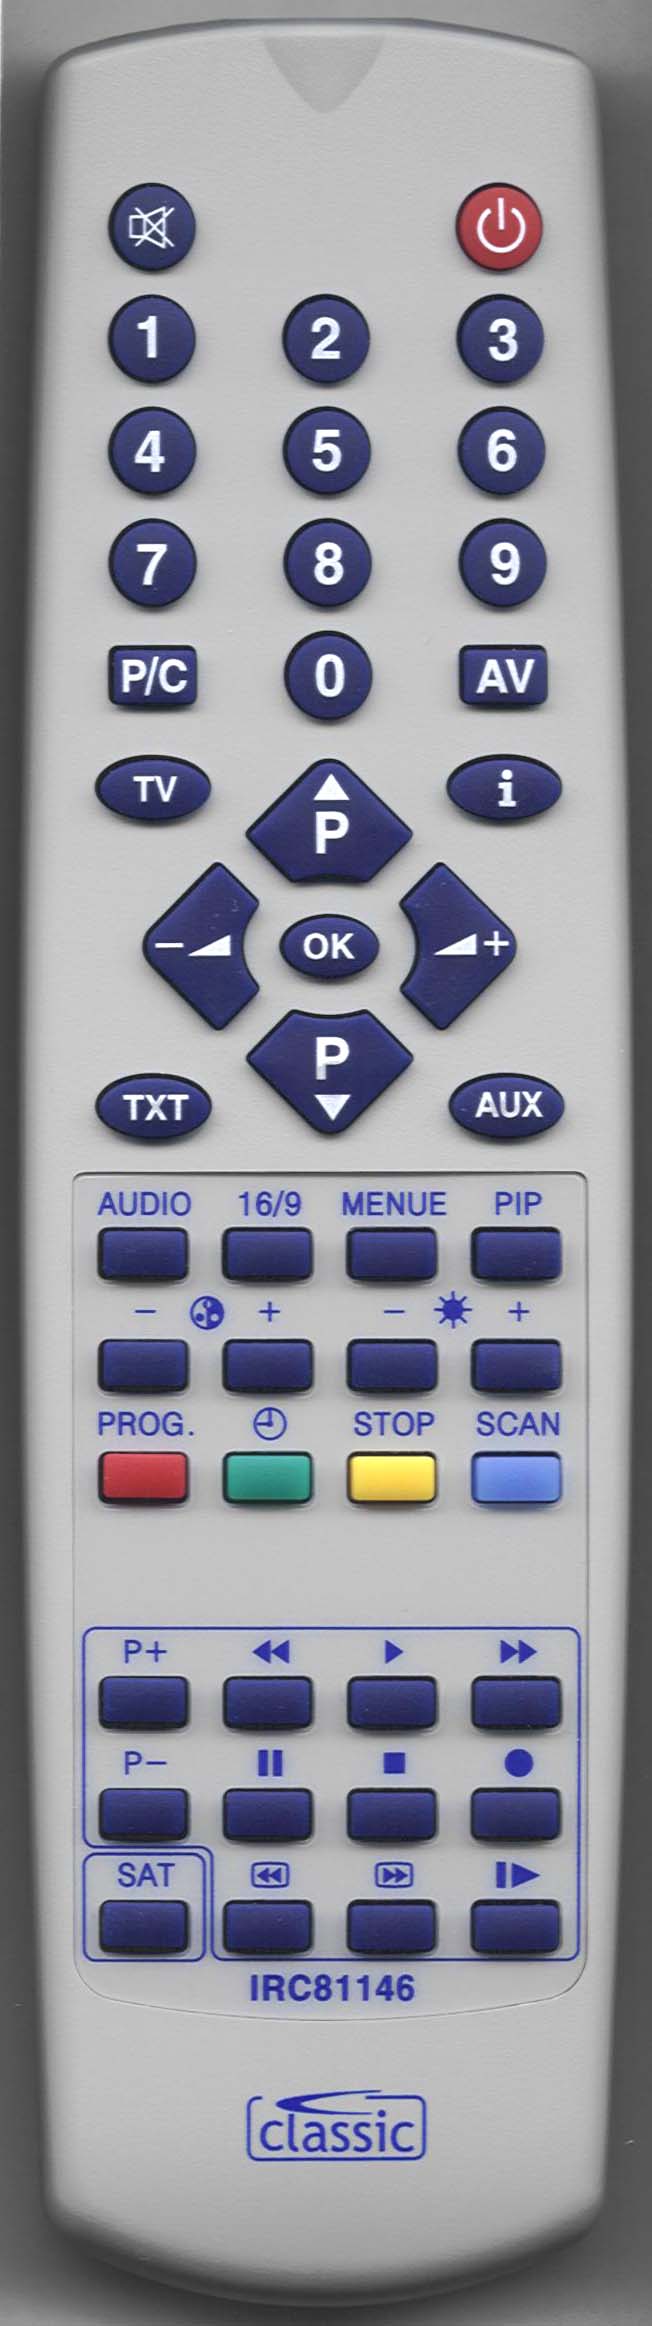 Blaupunkt IS7052VTPIP Remote Control Alternative